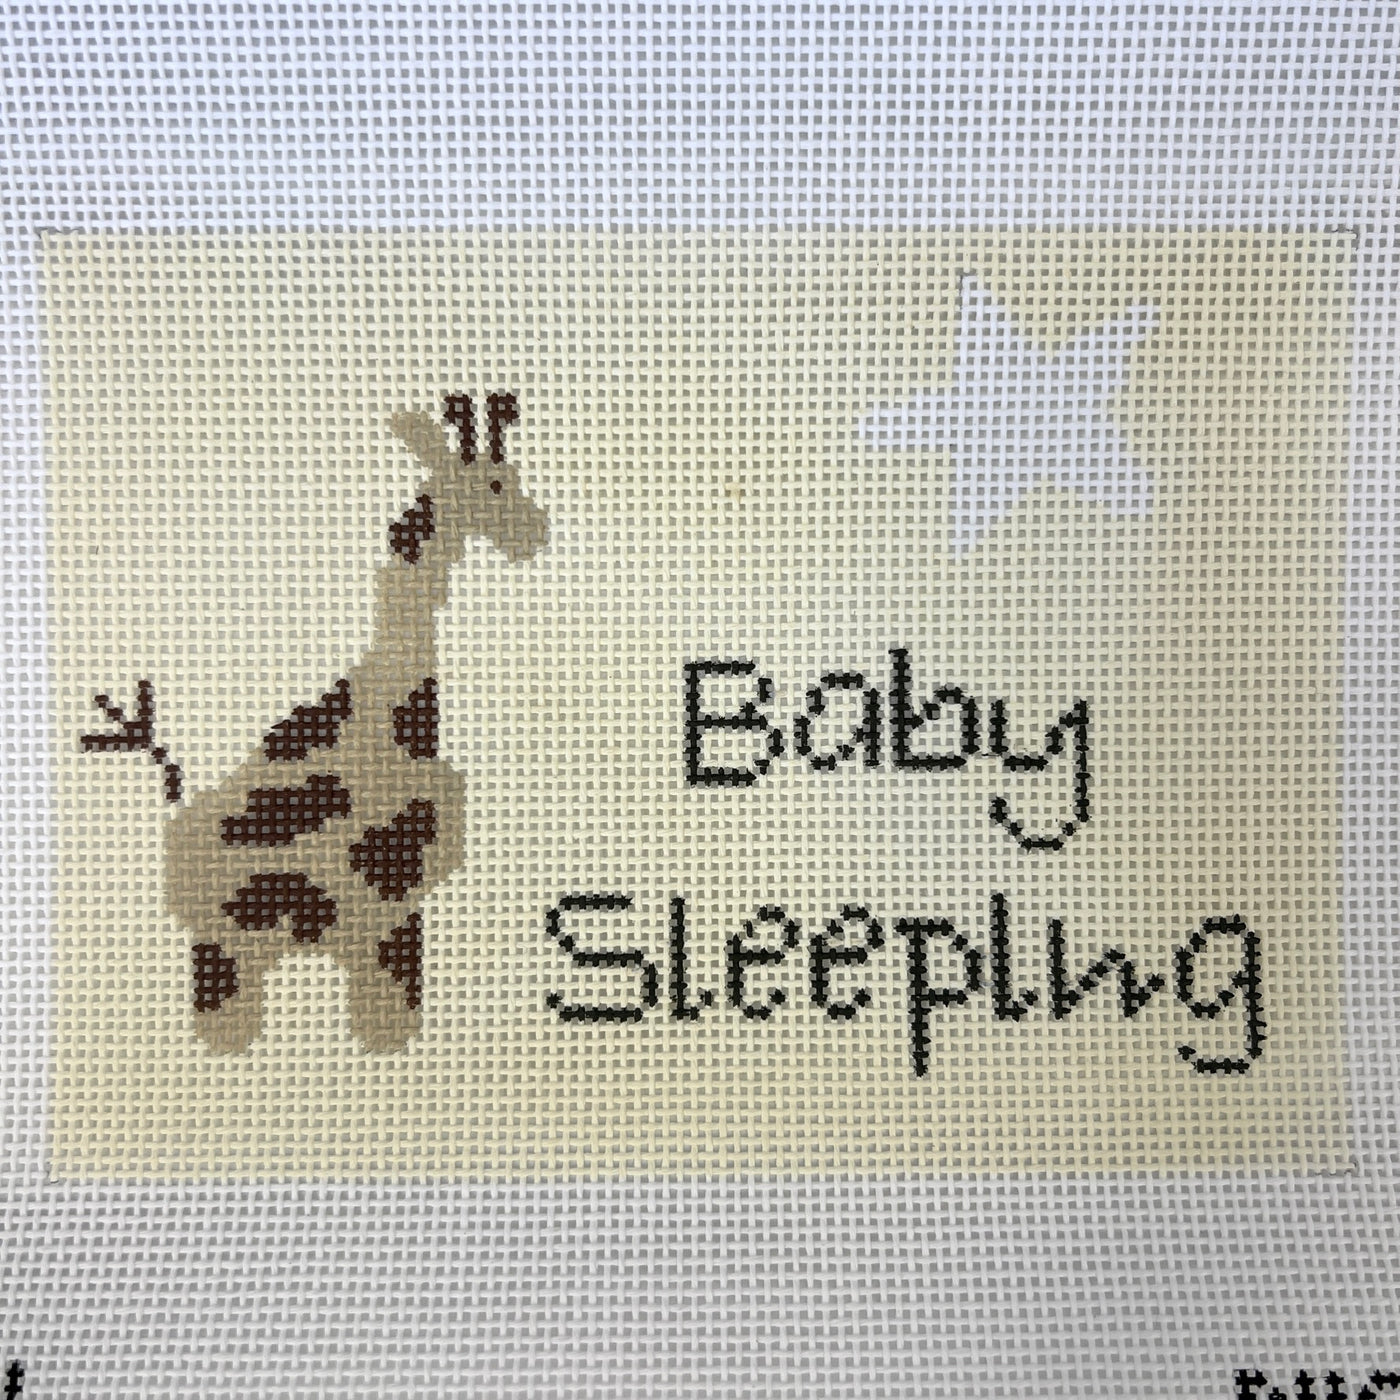 Giraffe baby sleeping